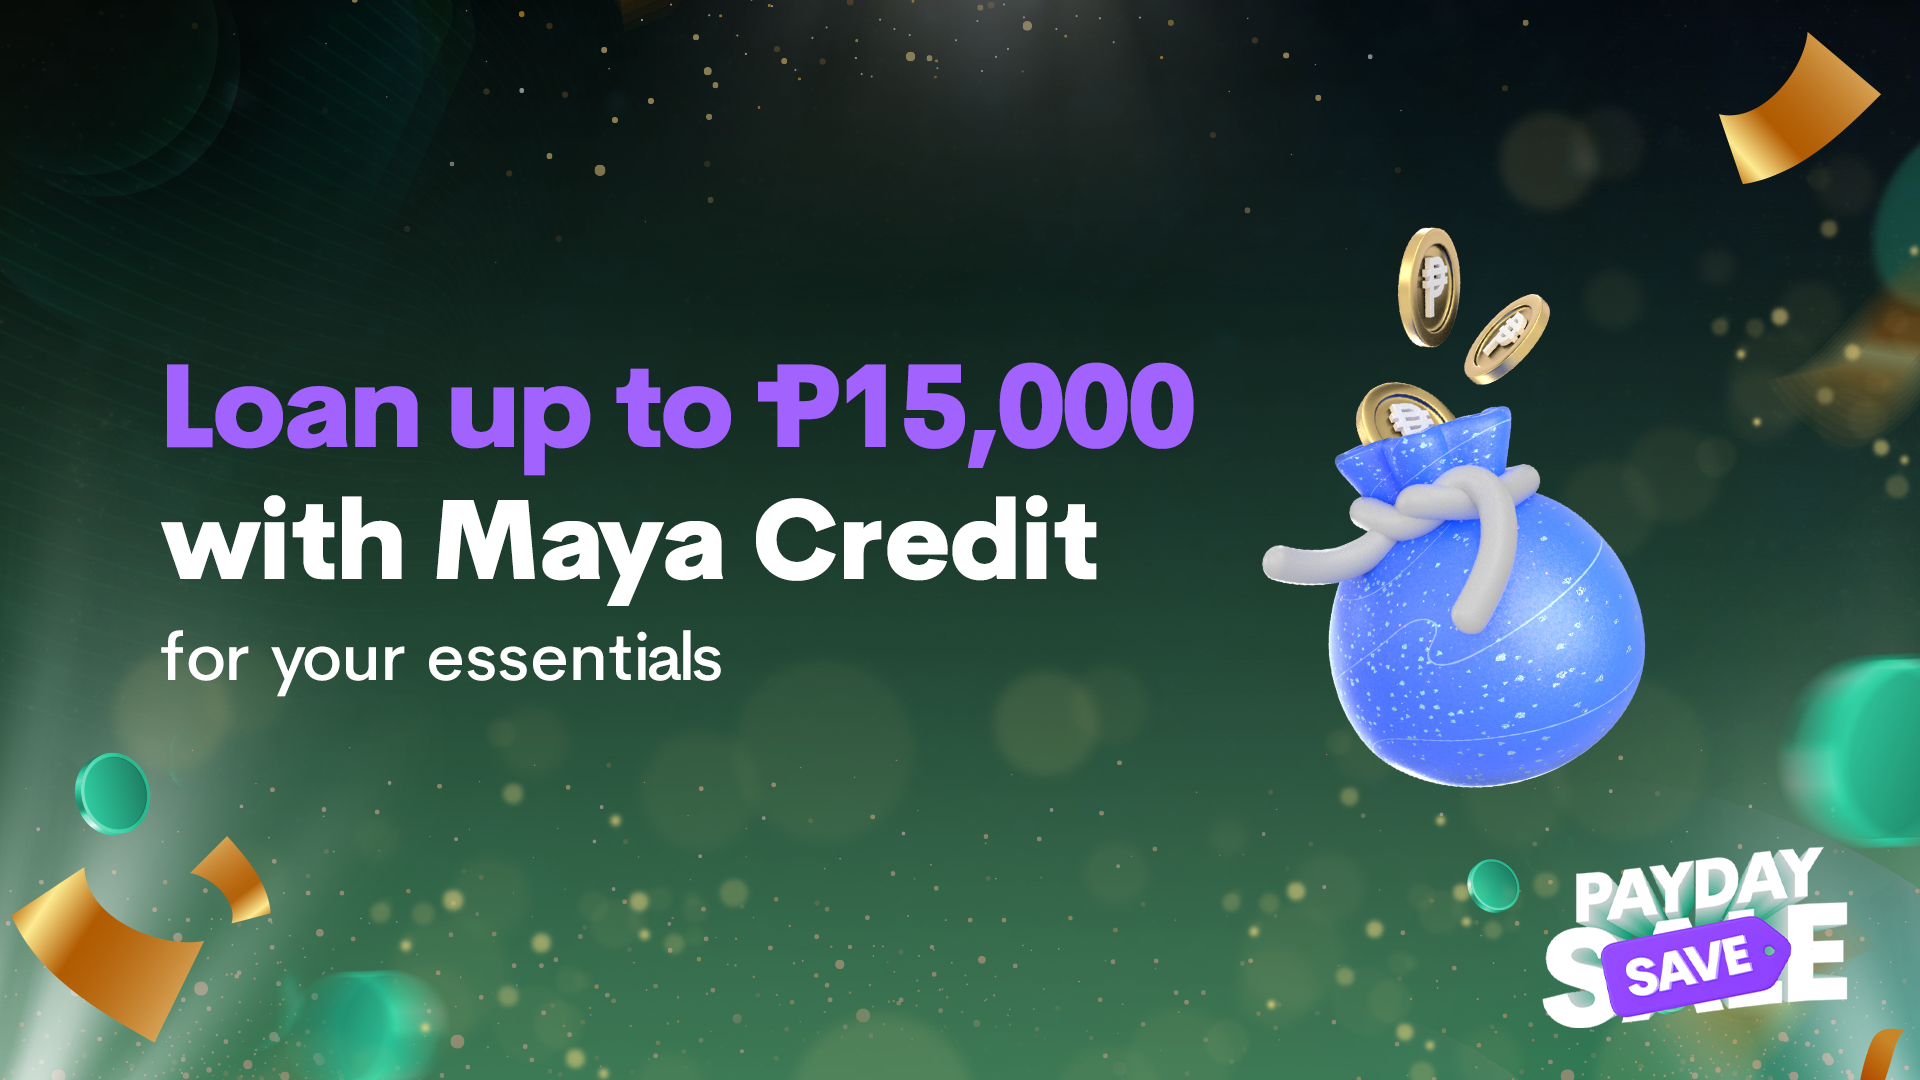 Loan up to ₱15,000 with Maya Credit